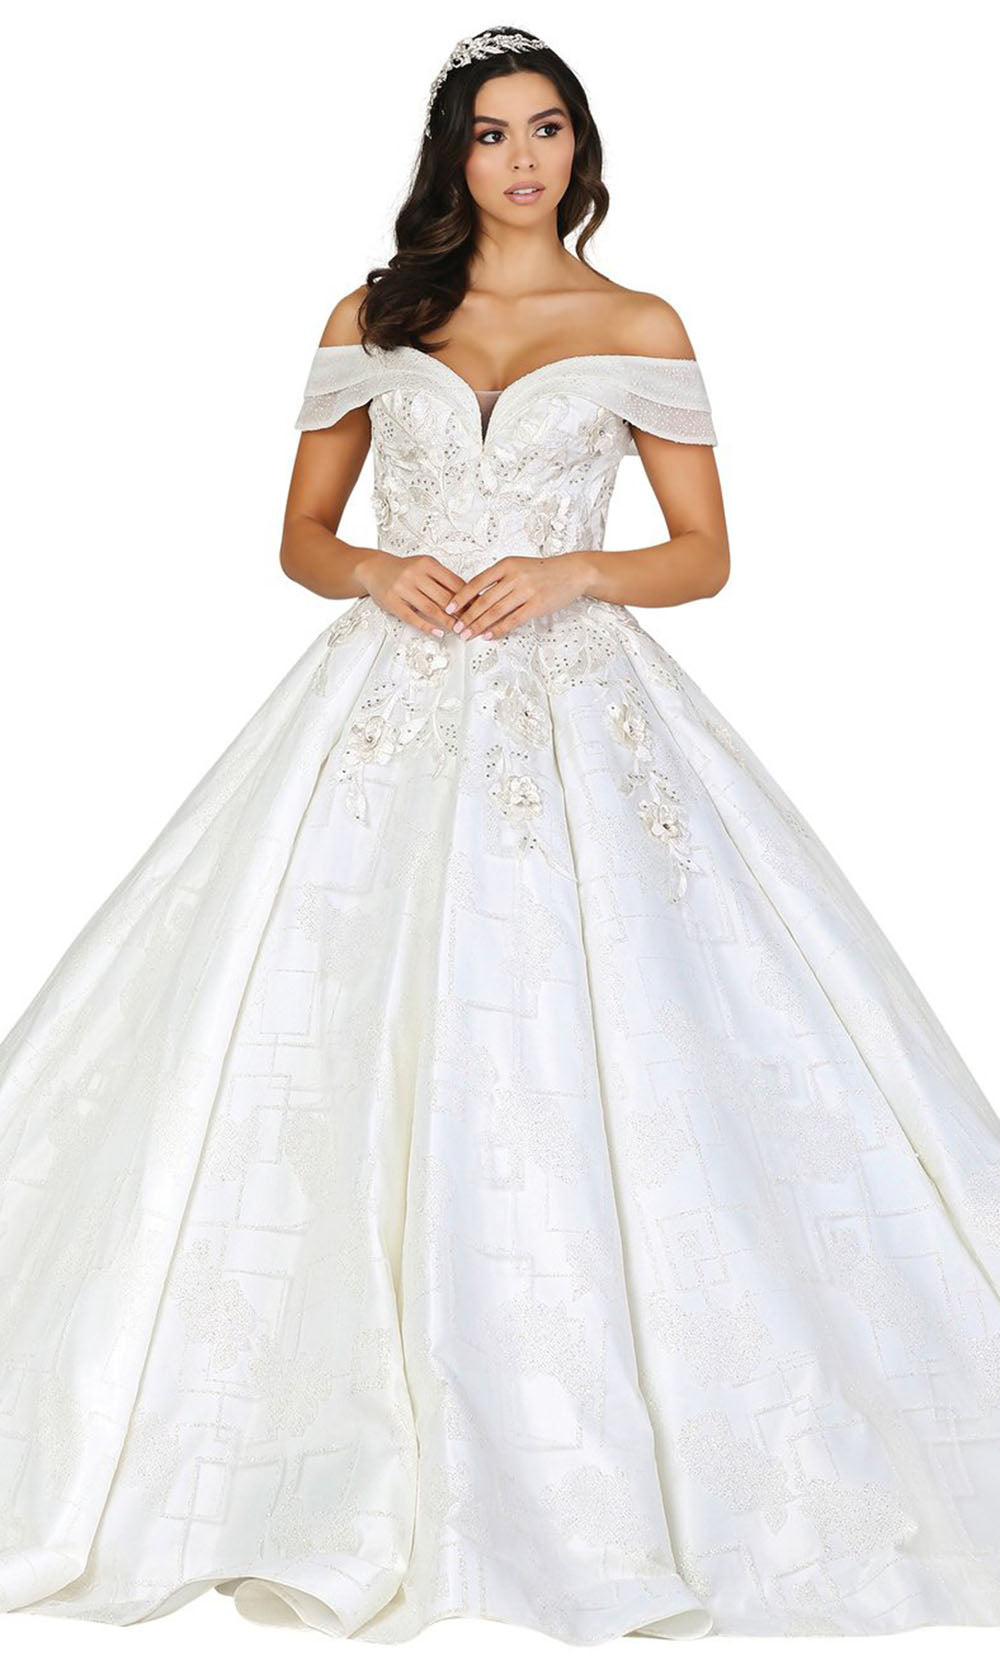 Dancing Queen - 153 Off Shoulder Embellished Bridal Ballgown In White